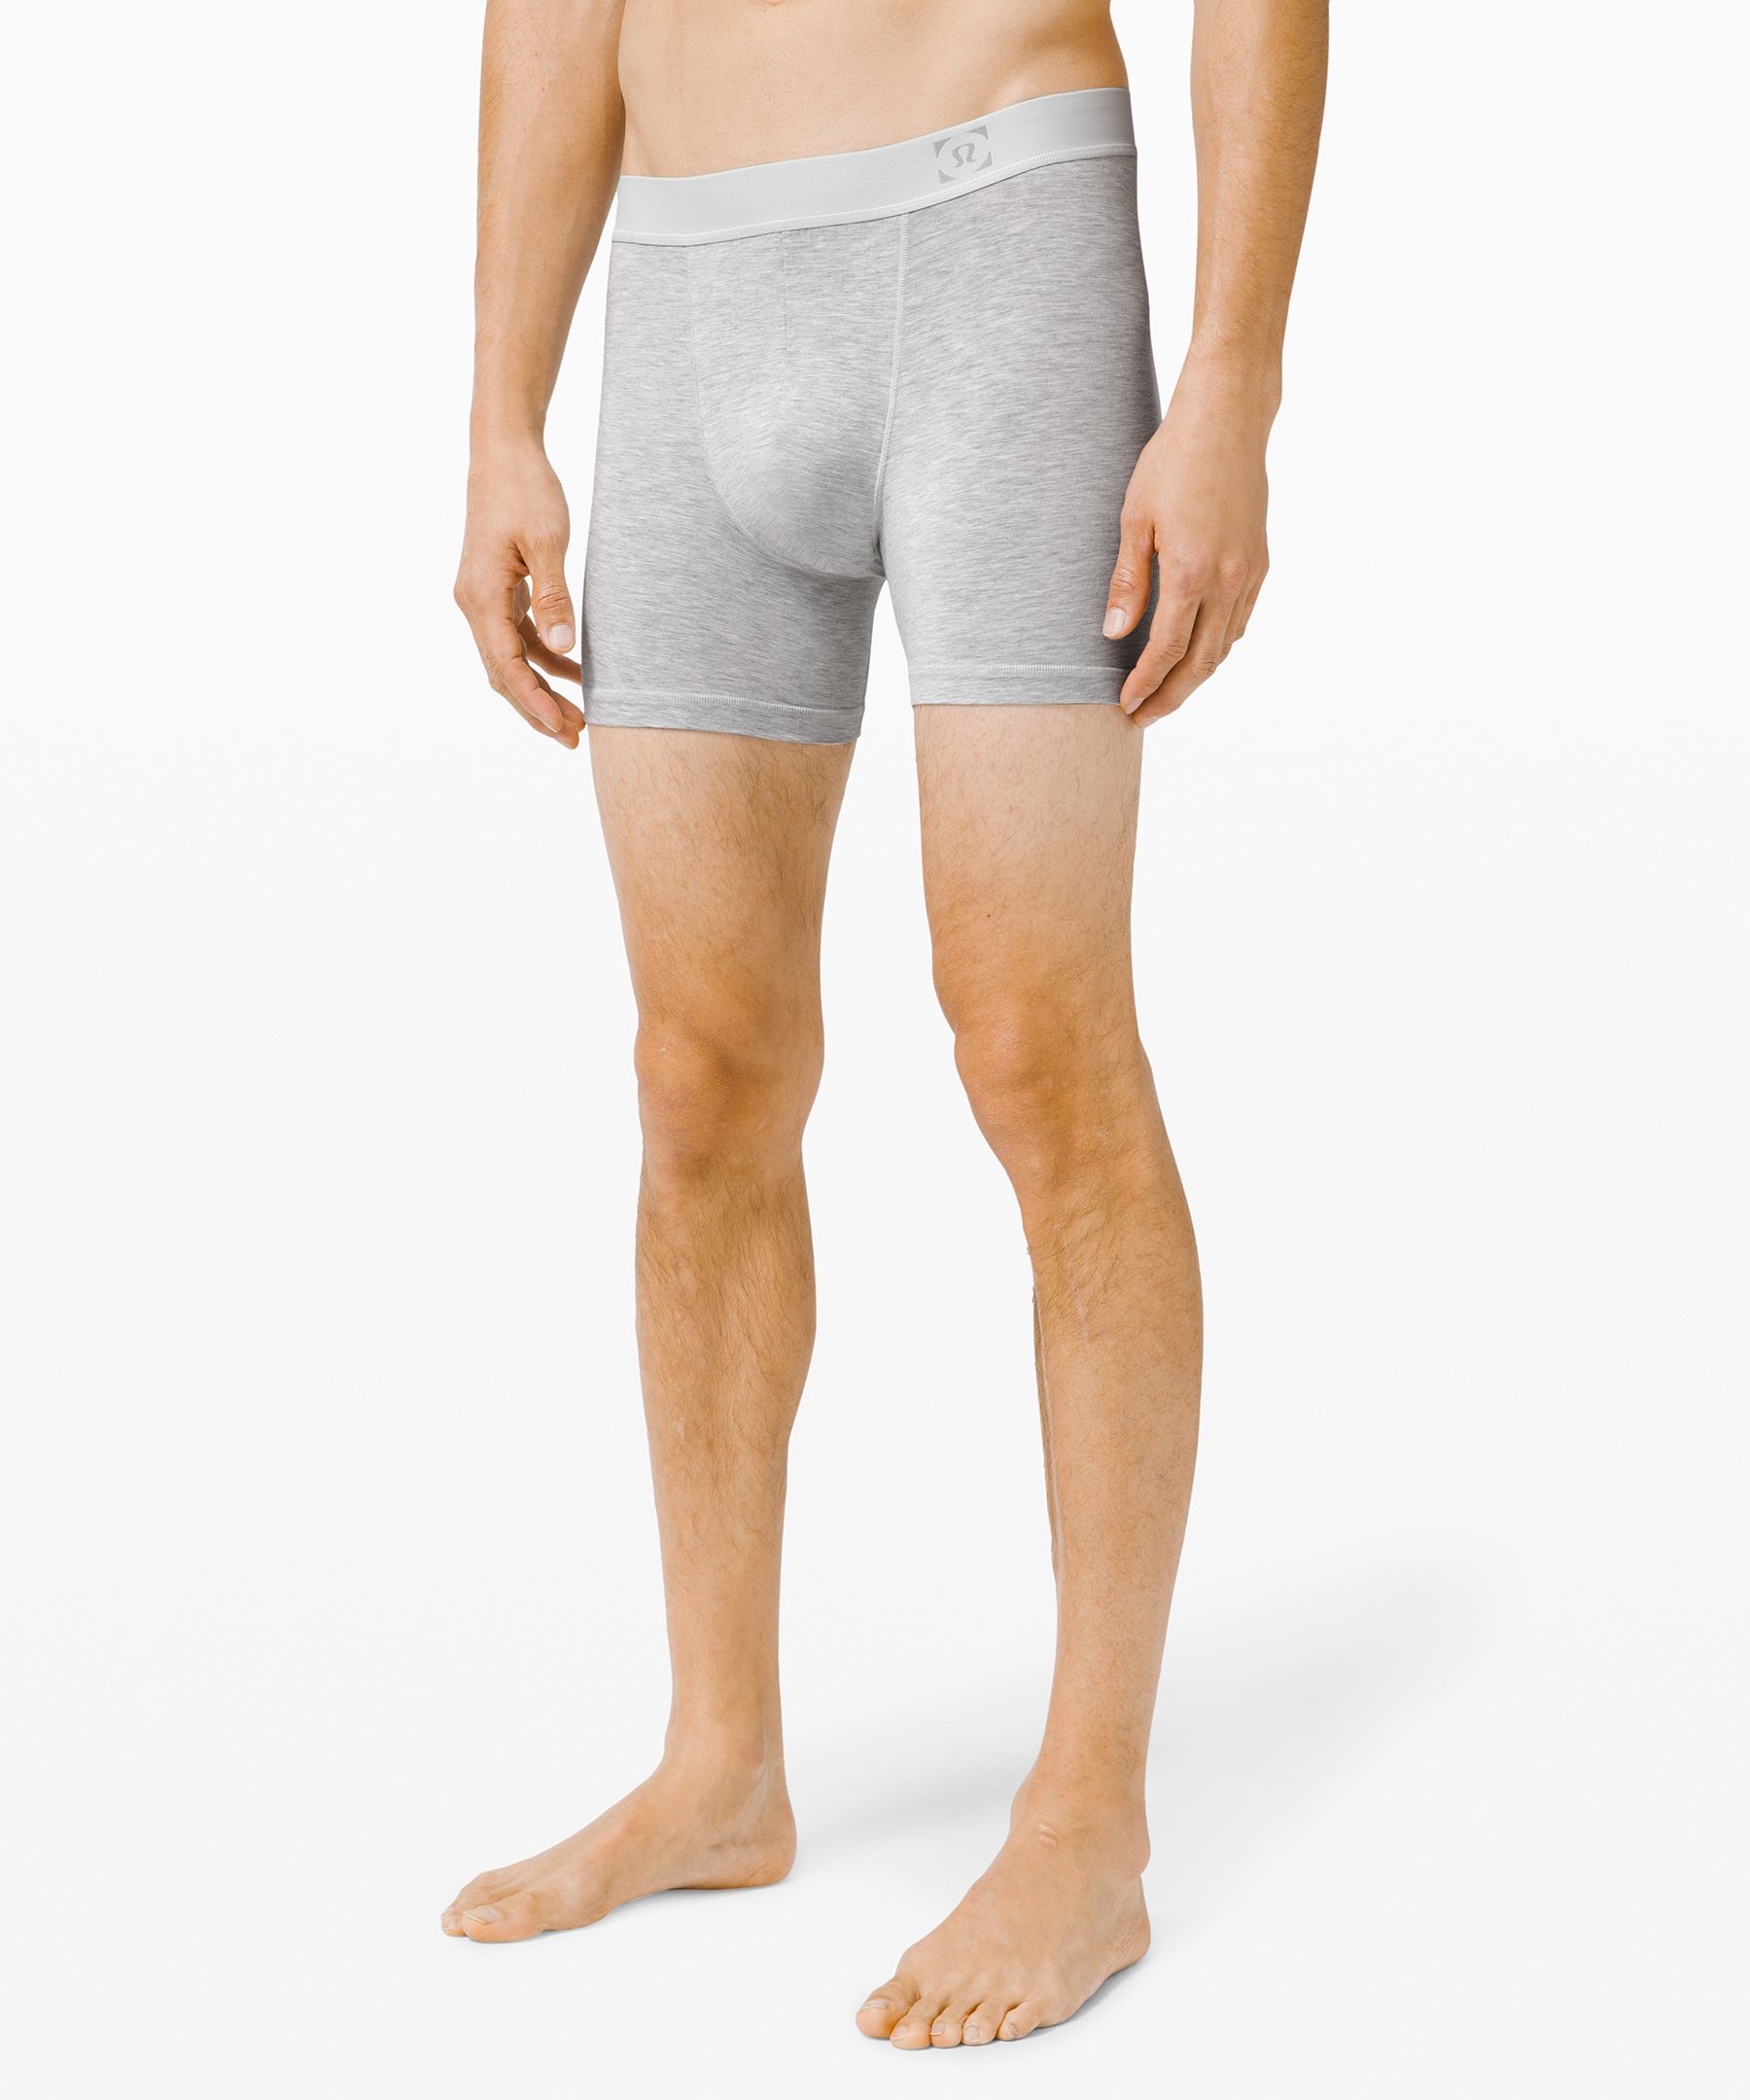 David Archy Underwear & Socks for Men - Poshmark